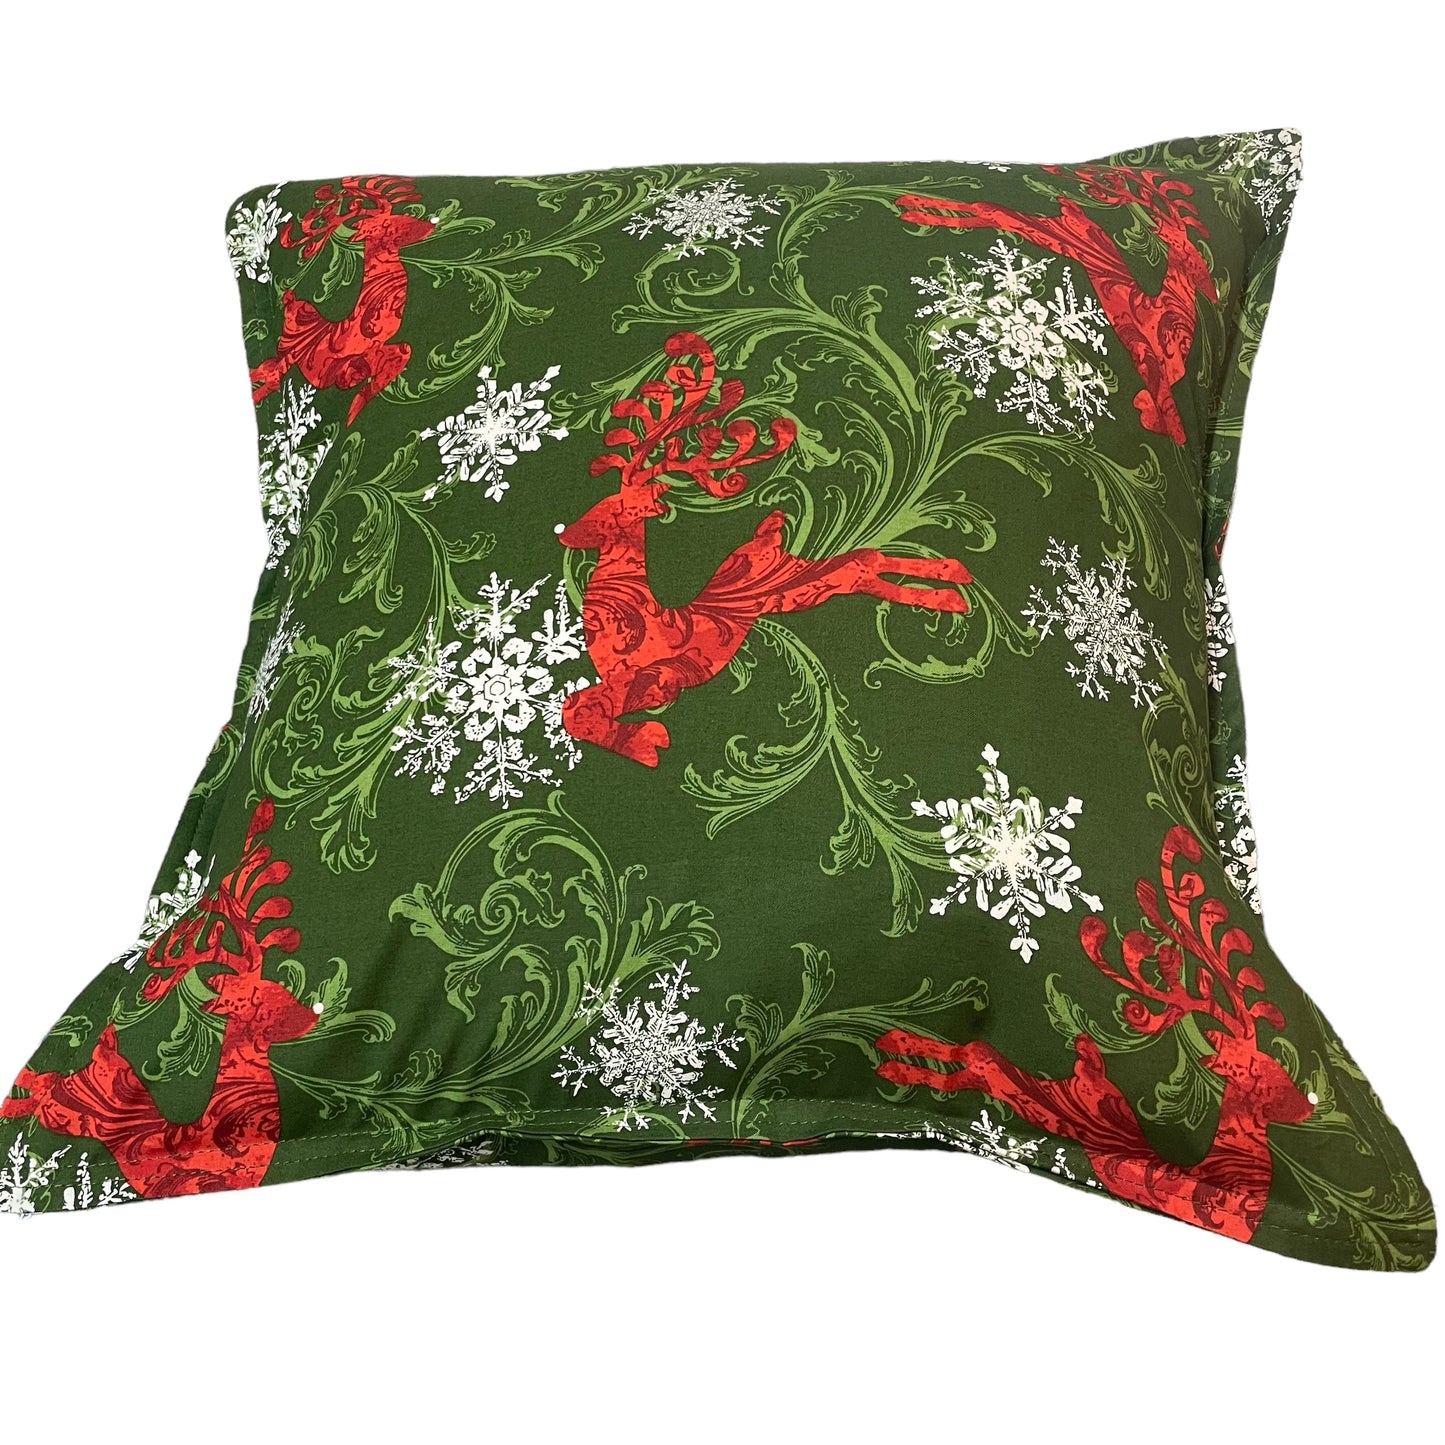 Reindeer Print Pillow Cotton Pillow Sham - Insert sold separately